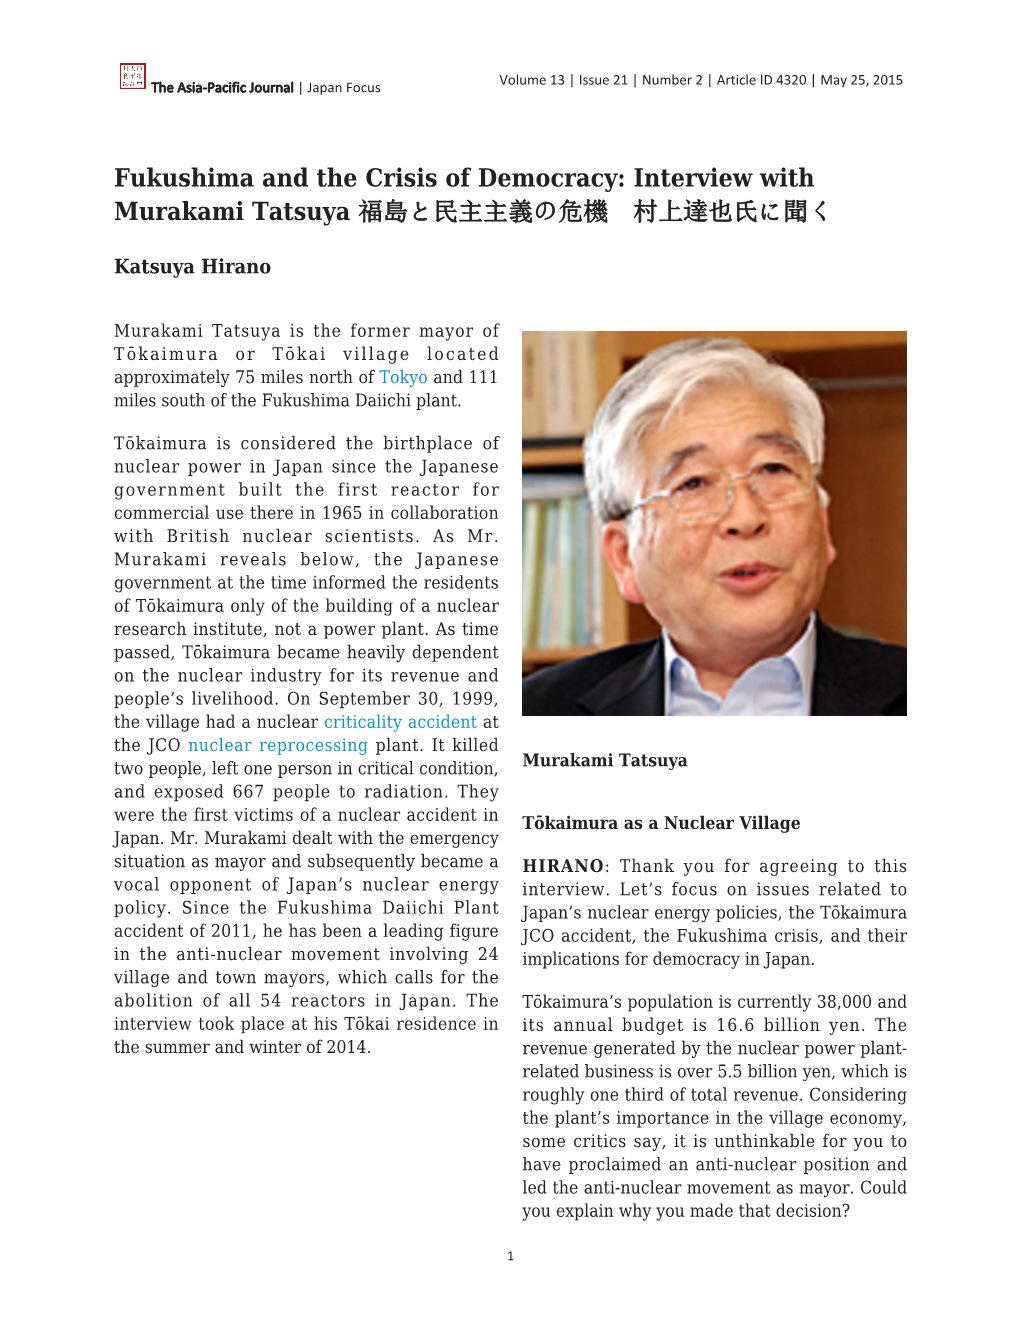 Fukushima and the Crisis of Democracy: Interview with Murakami Tatsuya 福島と民主主義の危機 村上達也氏に聞く